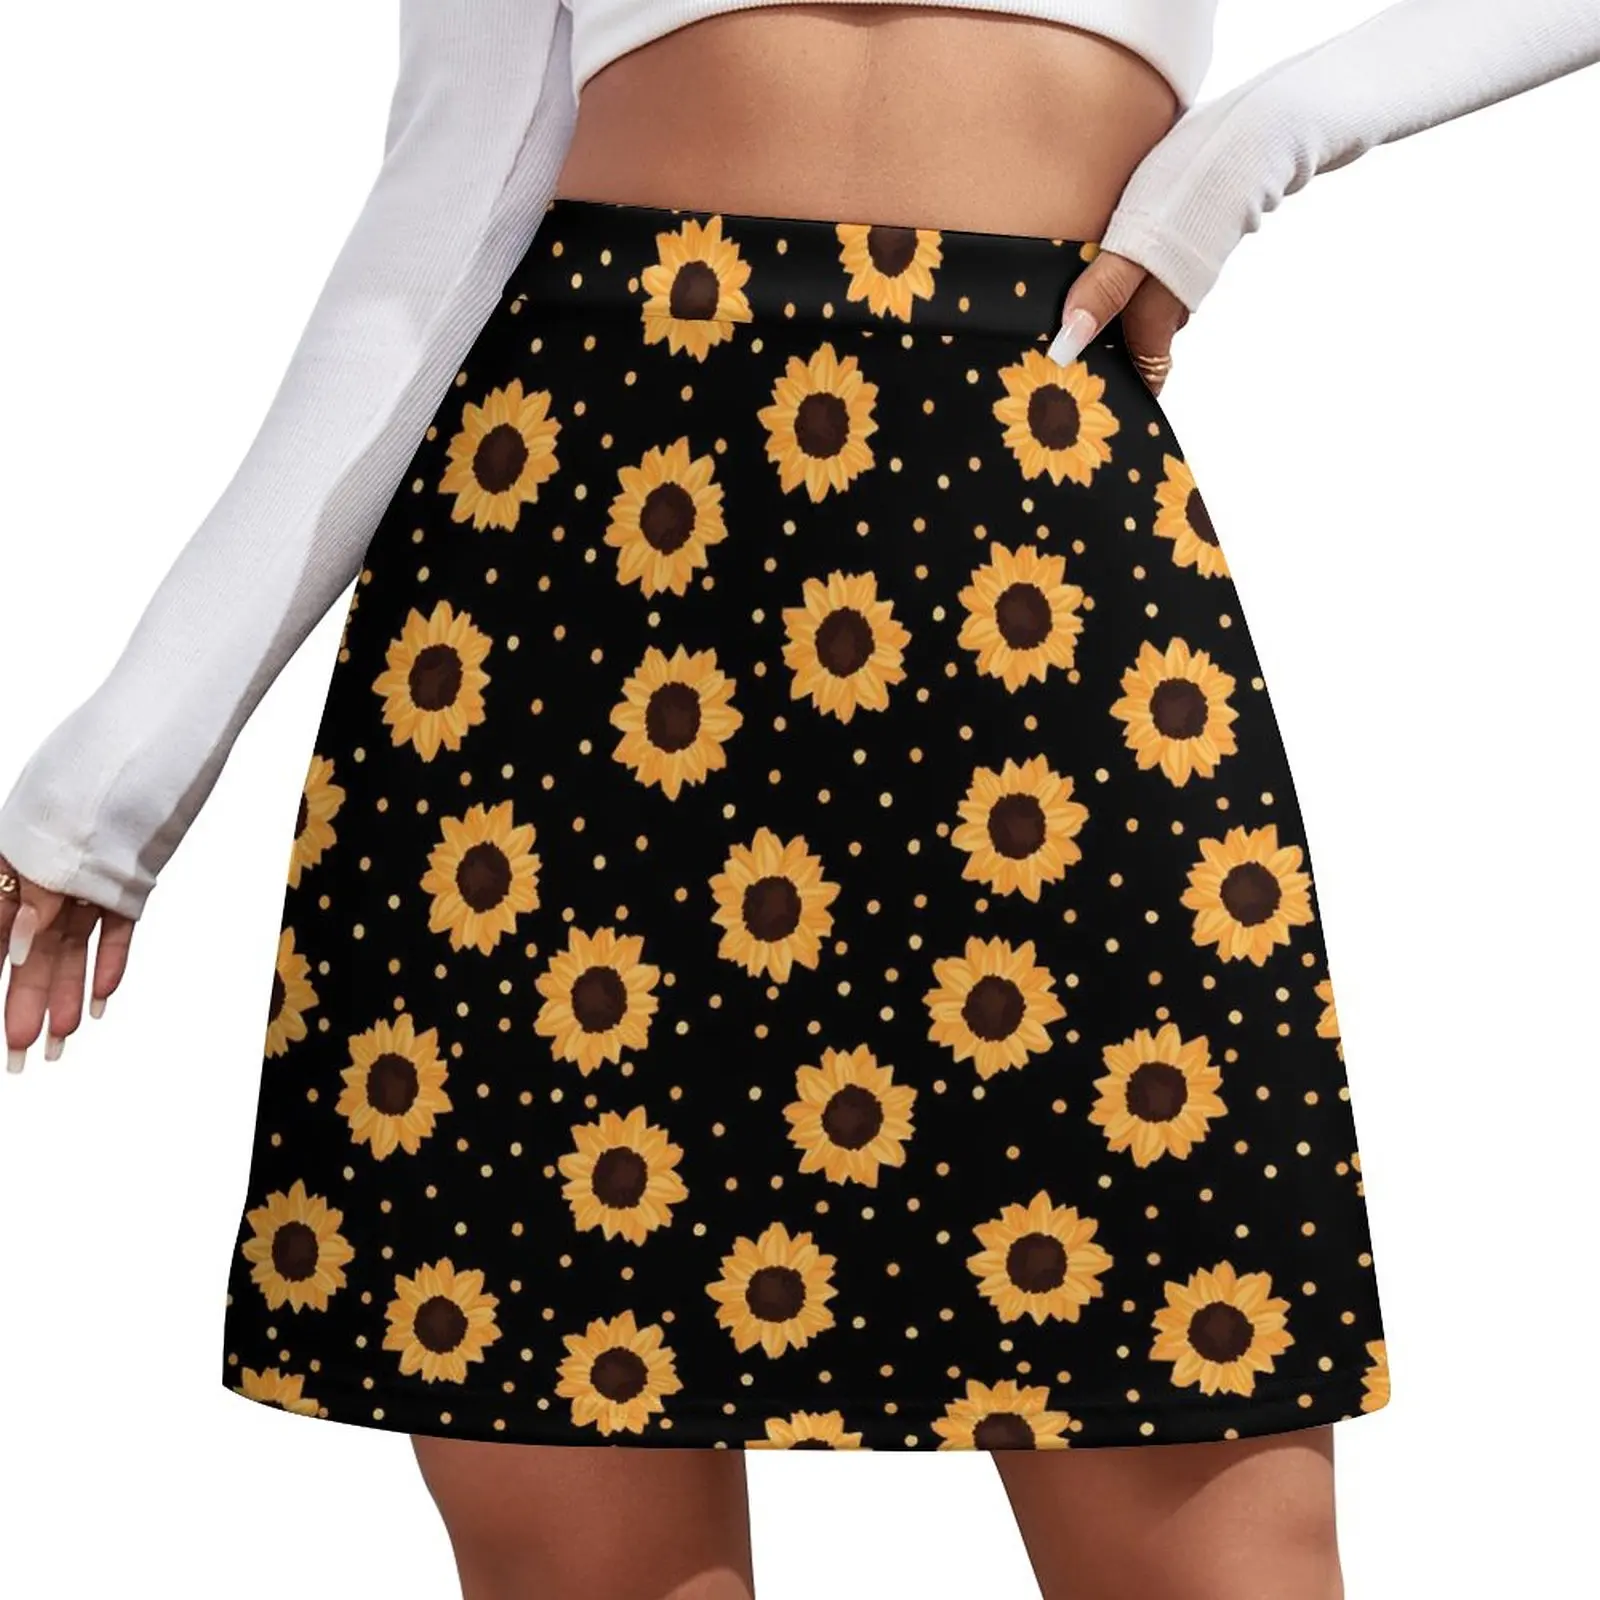 

Sunflower Skirt Polka Dots Streetwear Casual Skirts Womens Elegant Mini Skirt Pattern Skort Clothes Birthday Gift